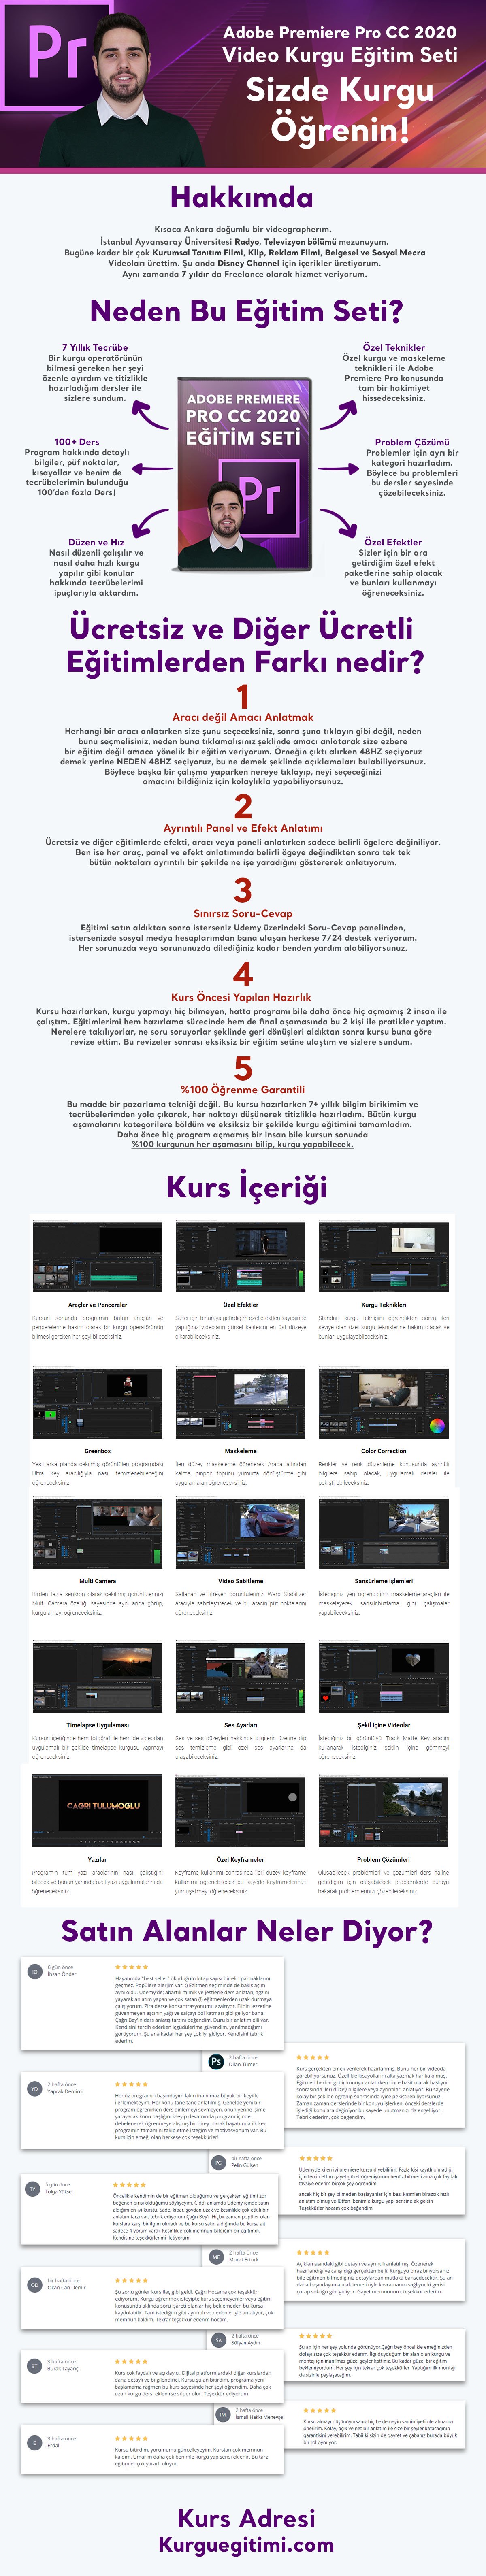 Adobe Premiere Pro CC 2020 - Video Kurgu Eğitim Seti 27,99 TL - Öğrenme Garantili !